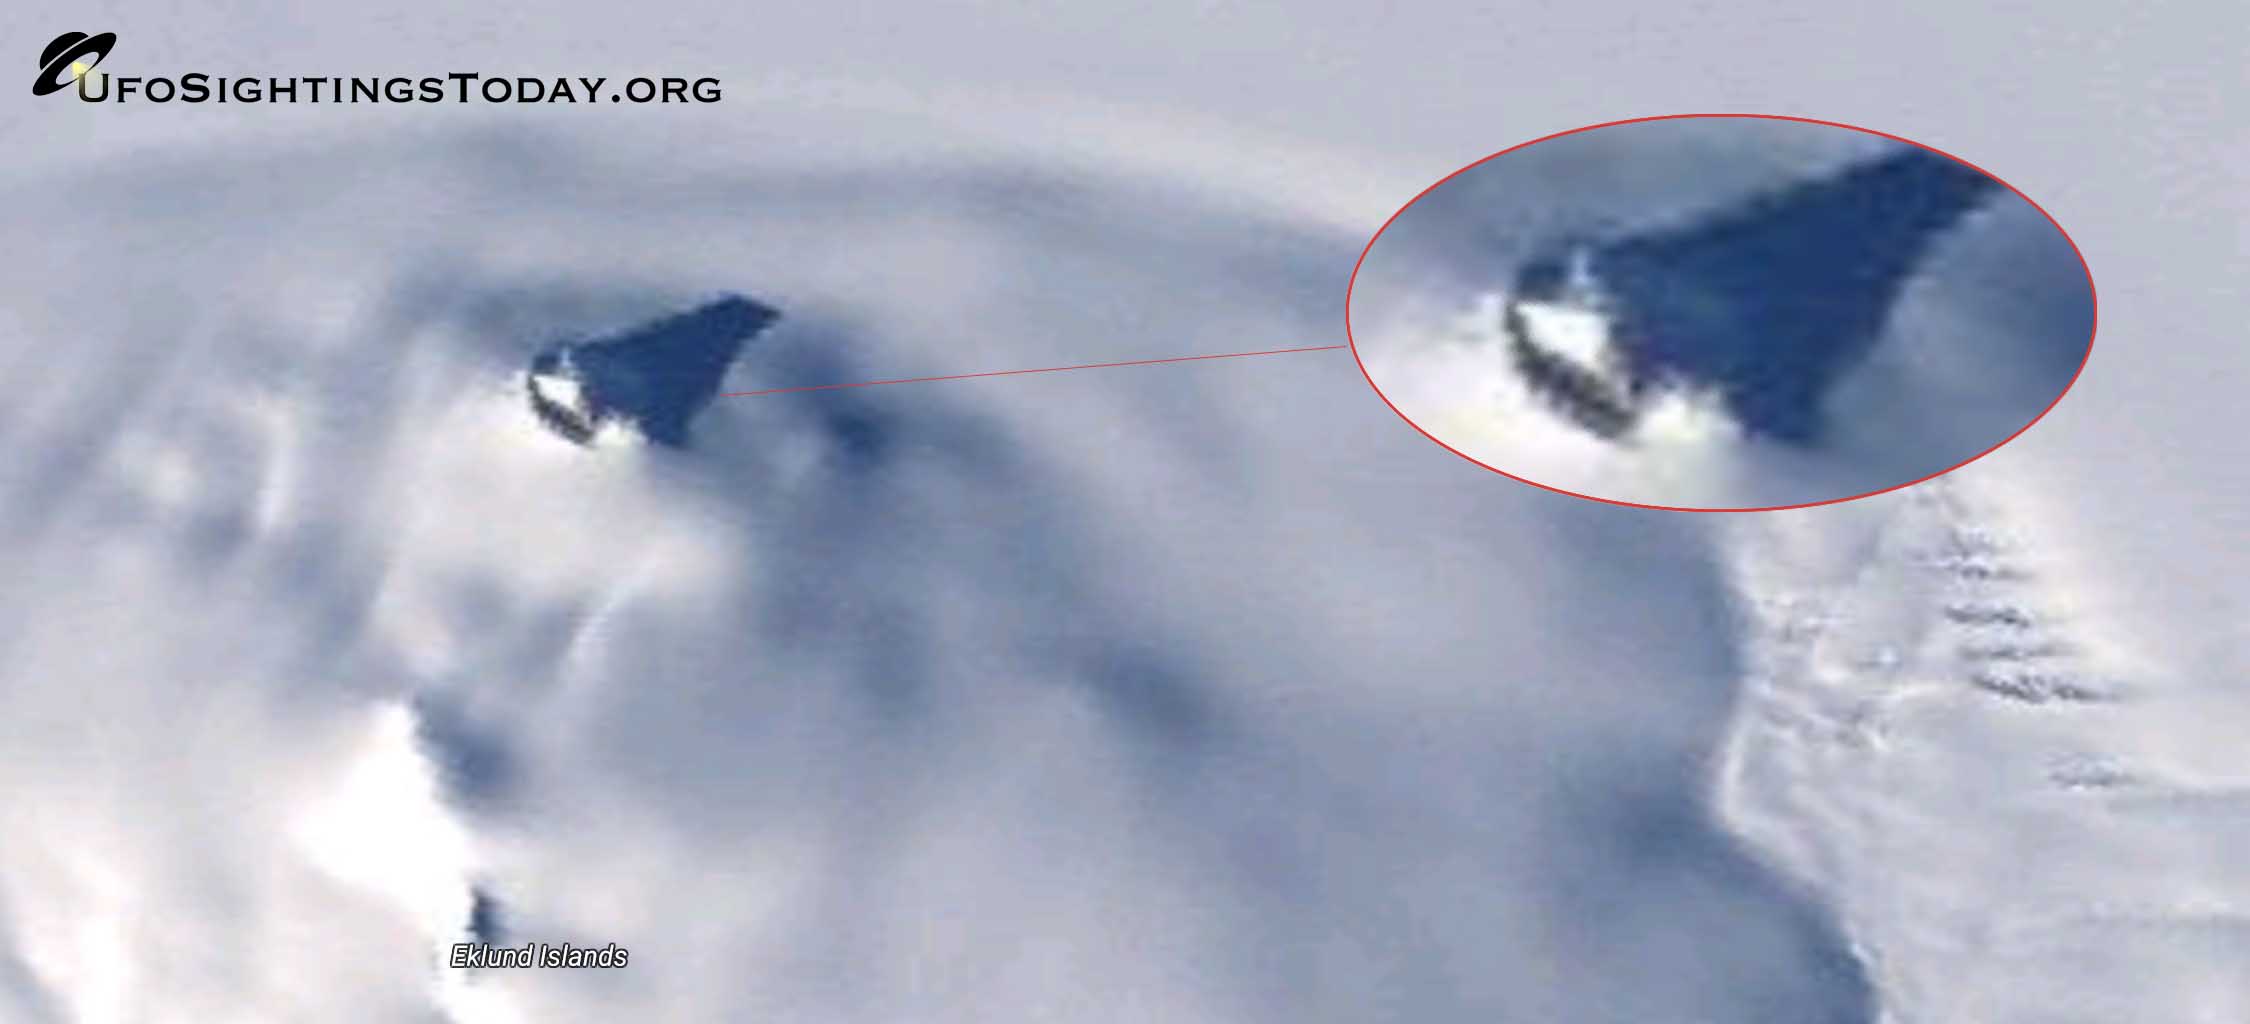 crashed ufo found in antarctica